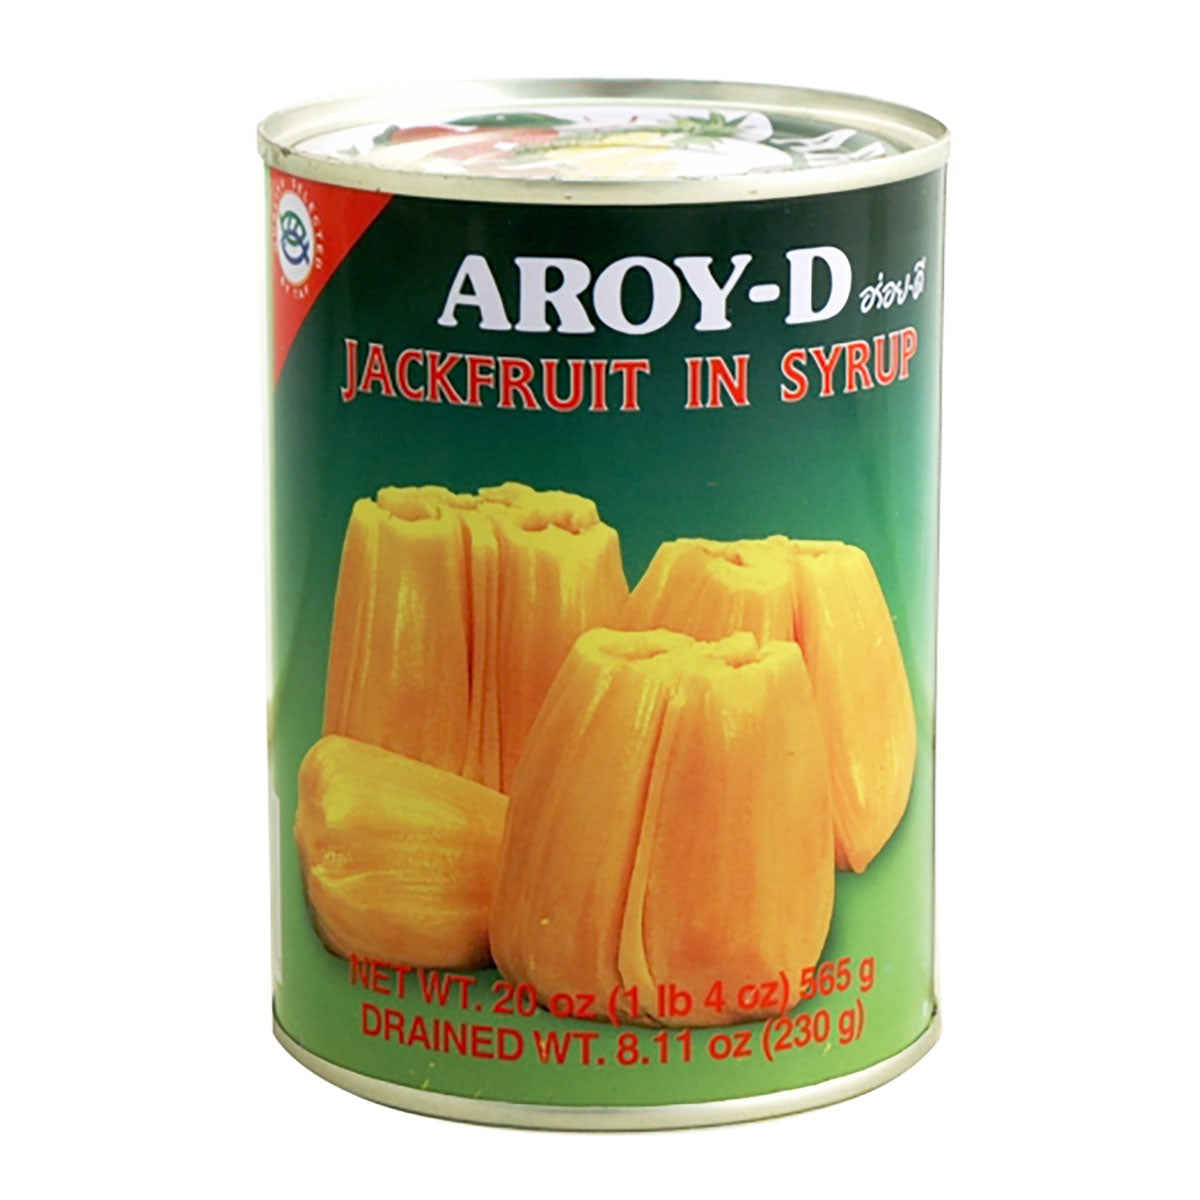 aroyd jackfruit in syrup - 20oz